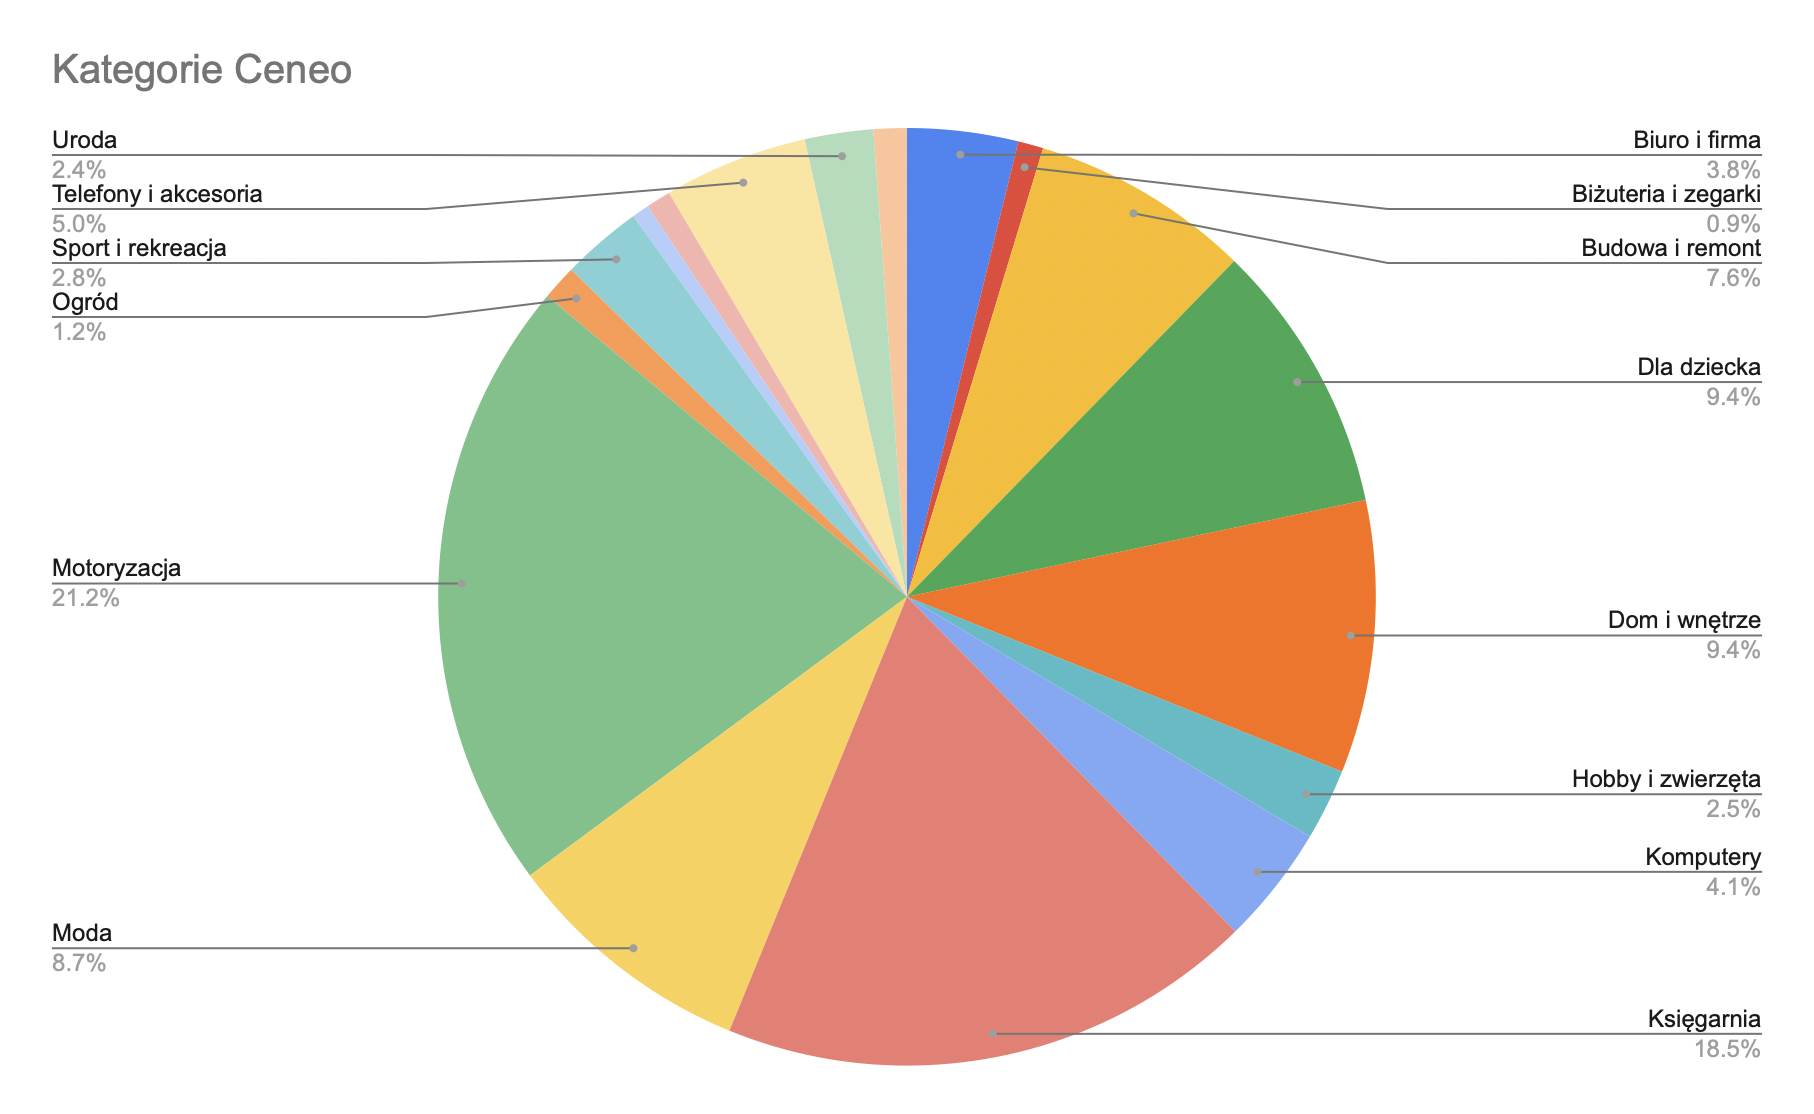 Ceneo Categories - Percentage Division